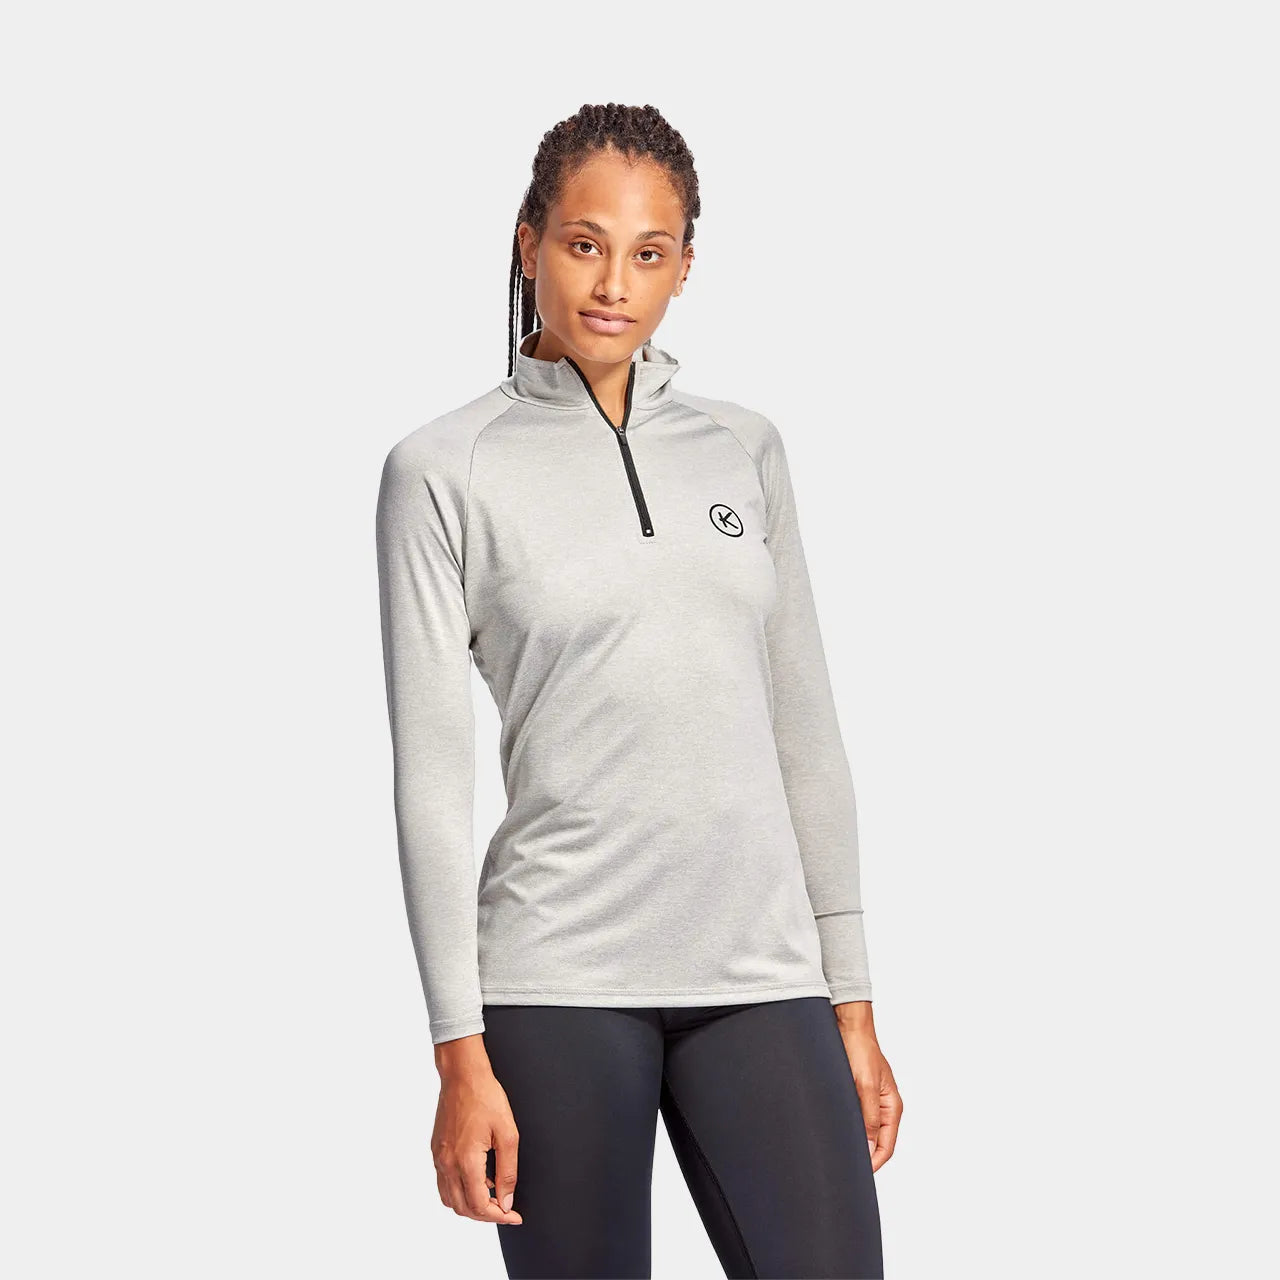 KYMIRA CHARGE Infrared Quarter Zip Women's Long Sleeve Top - Grey